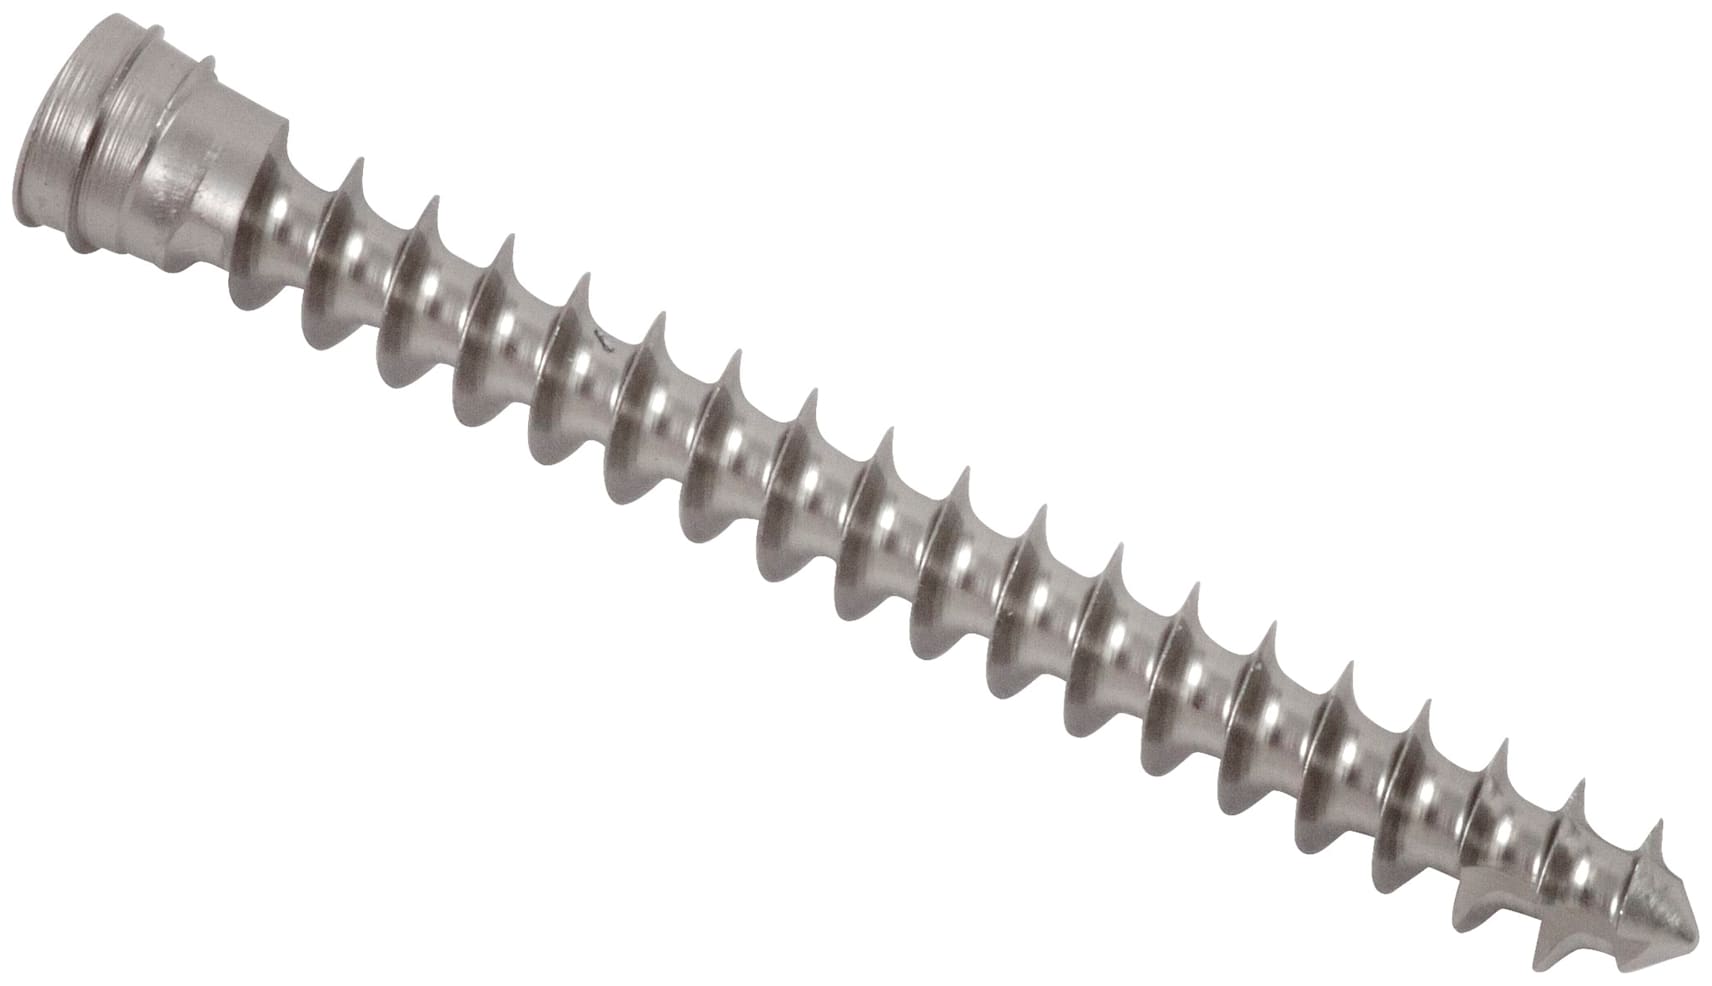 Cancellous Locking Screw, 4 mm x 38 mm